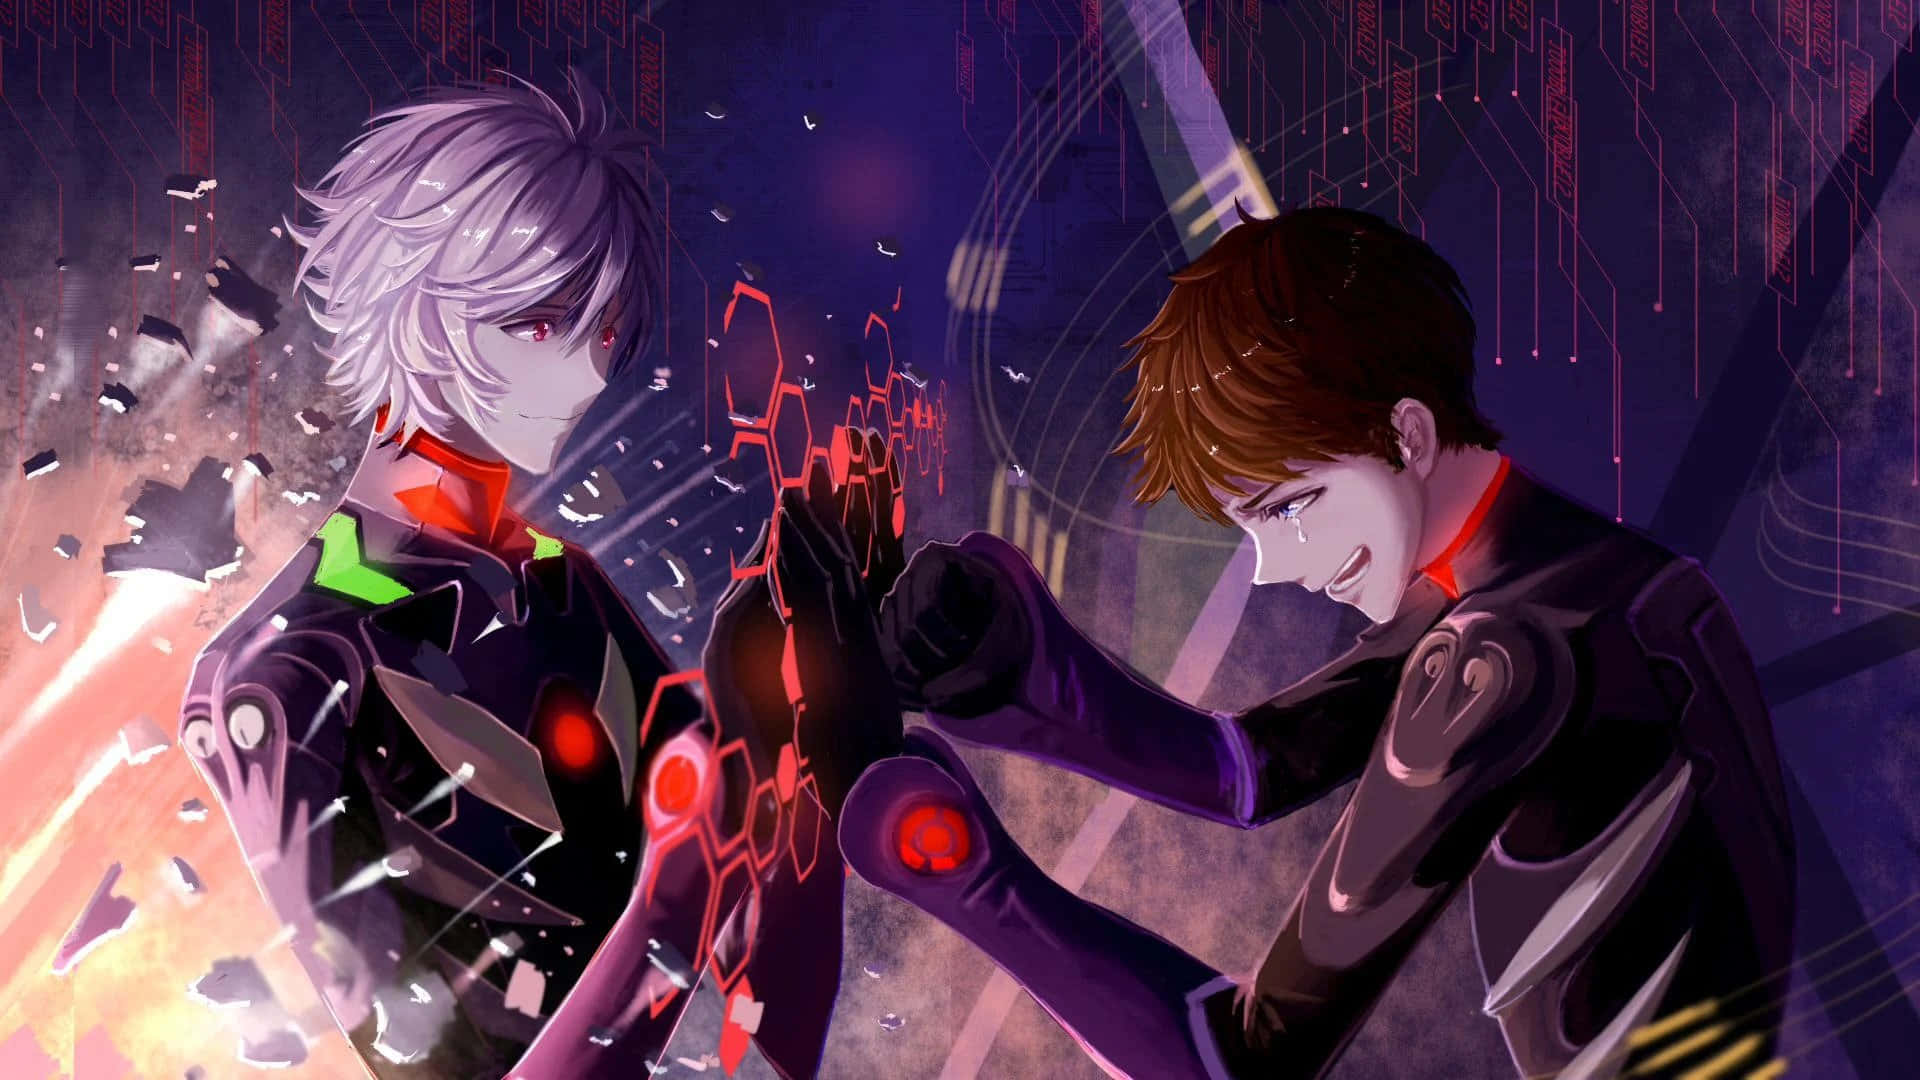 Shinji Ikari protects Tokyo-3 from coming danger in Neon Genesis Evangelion